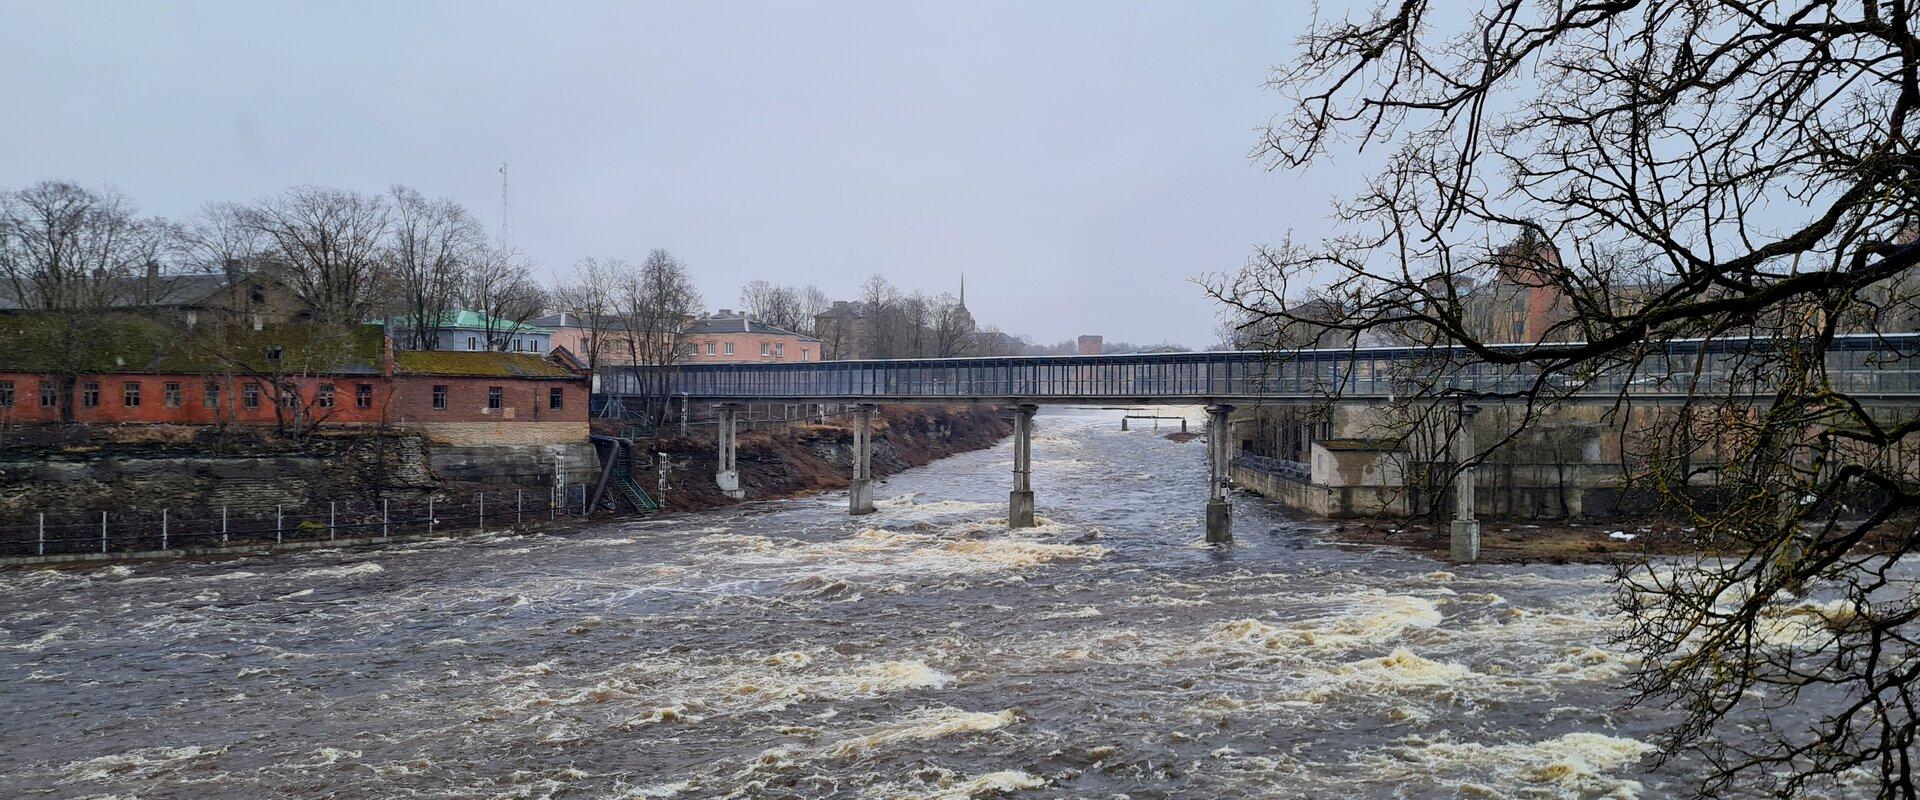 Narva kosed vihmasel ilmal